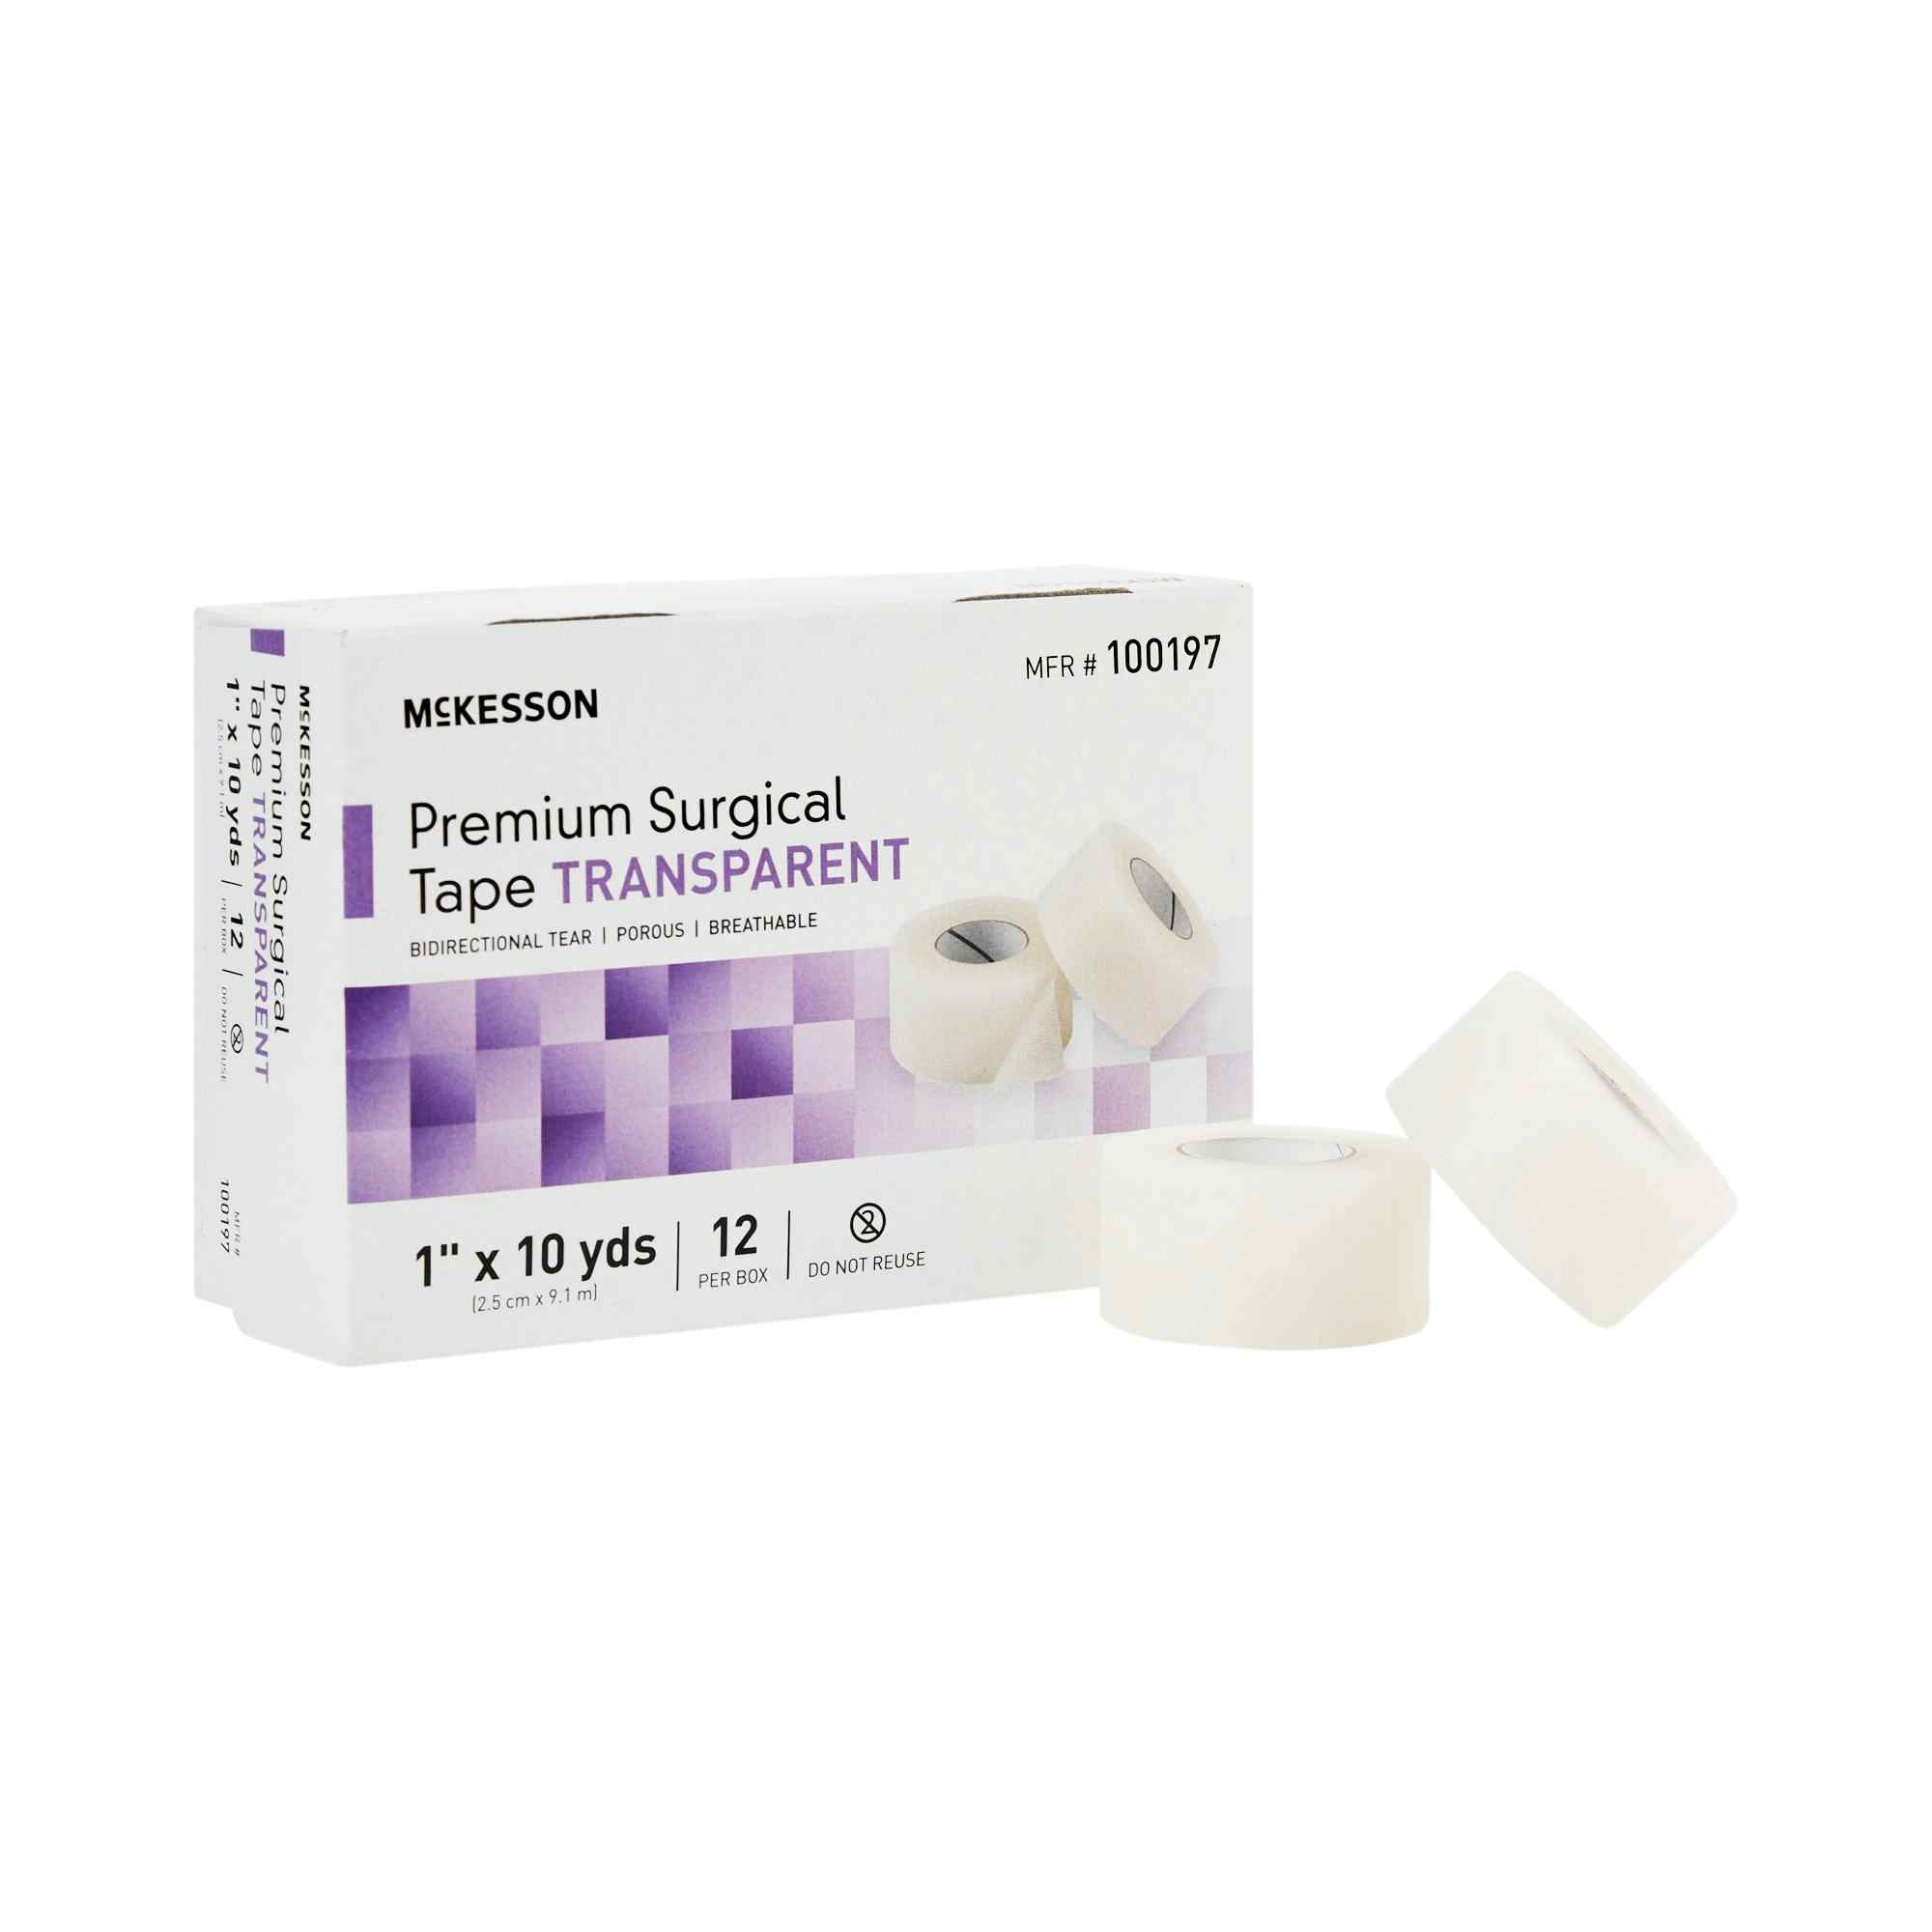 McKesson Transparent Surgical Tape, 1" X 10 yd, Transparent, 100197, Box of 12